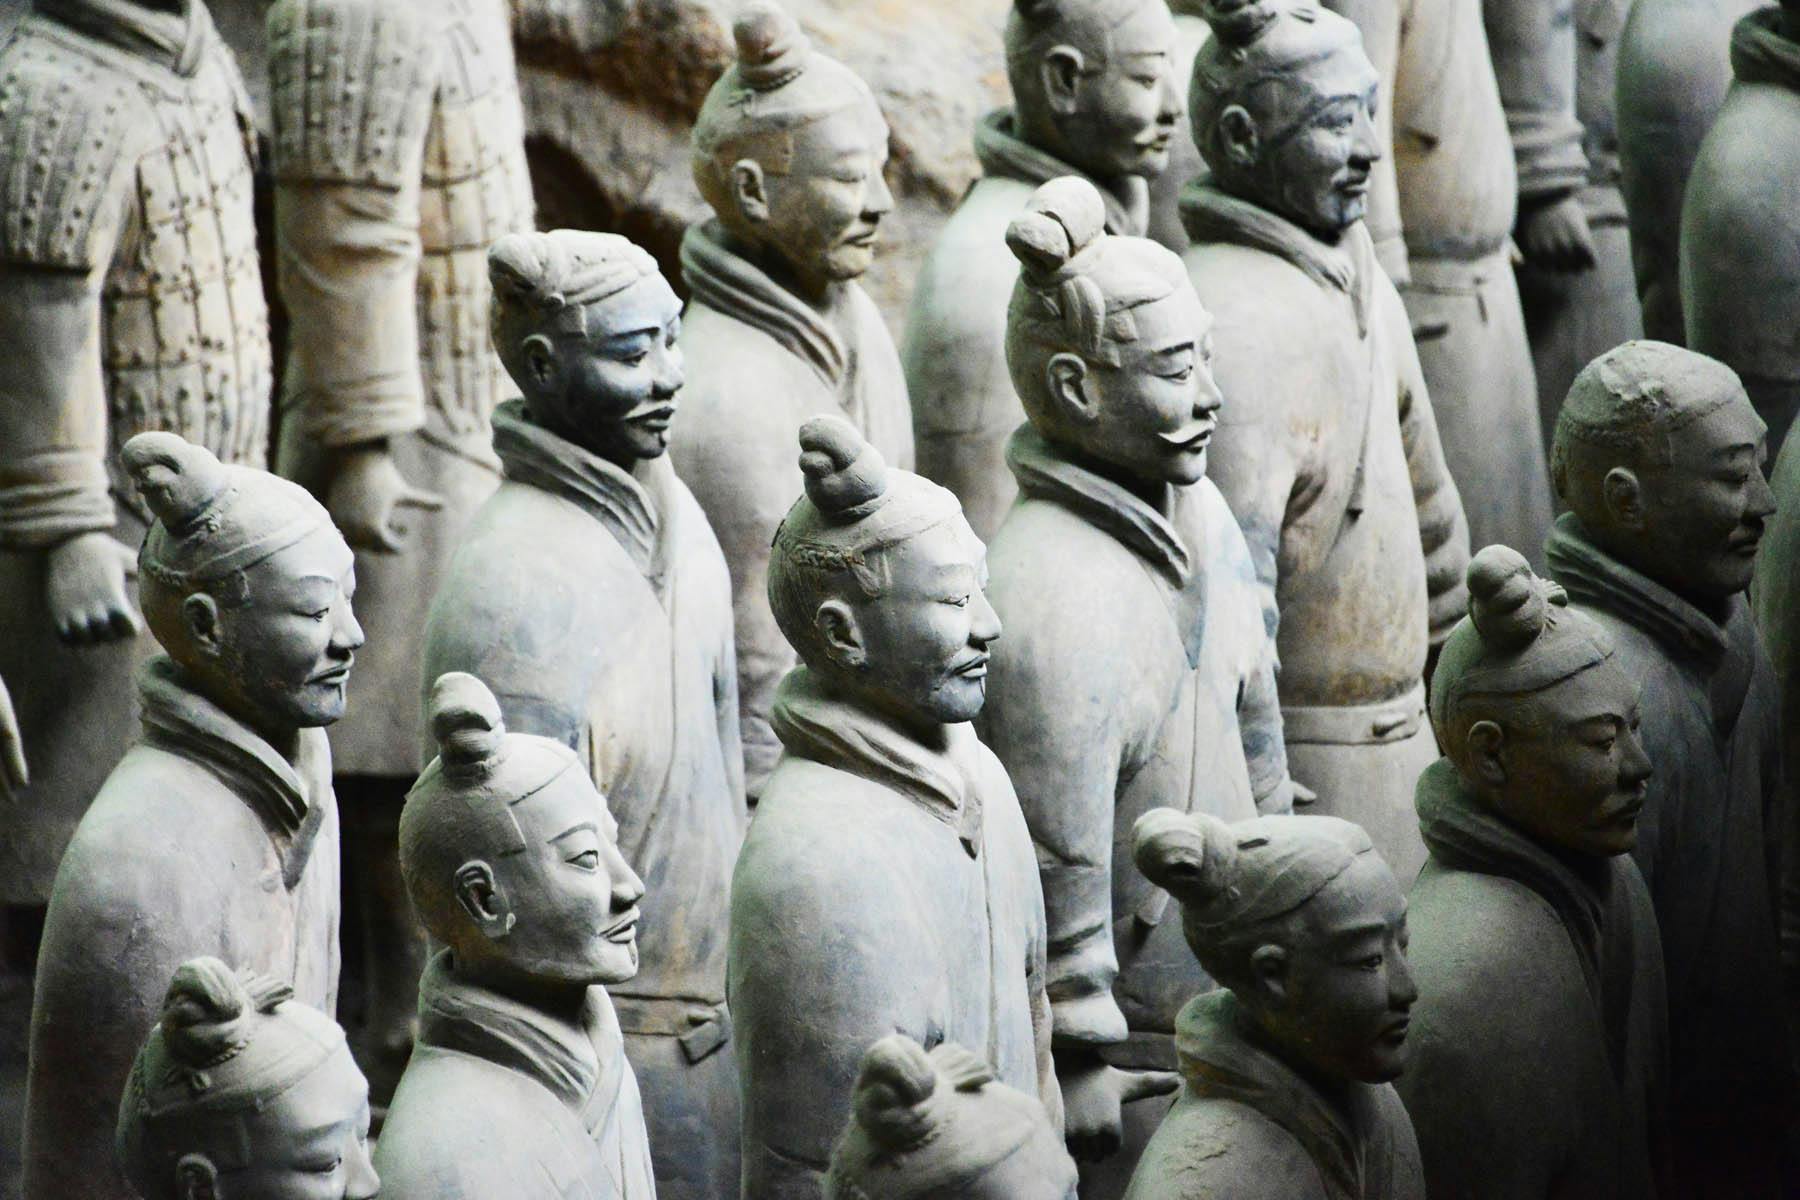 Terracotta Warriors and Tang Dynasty Show Xi'an Kleingruppentour mit einem lokalen Guide